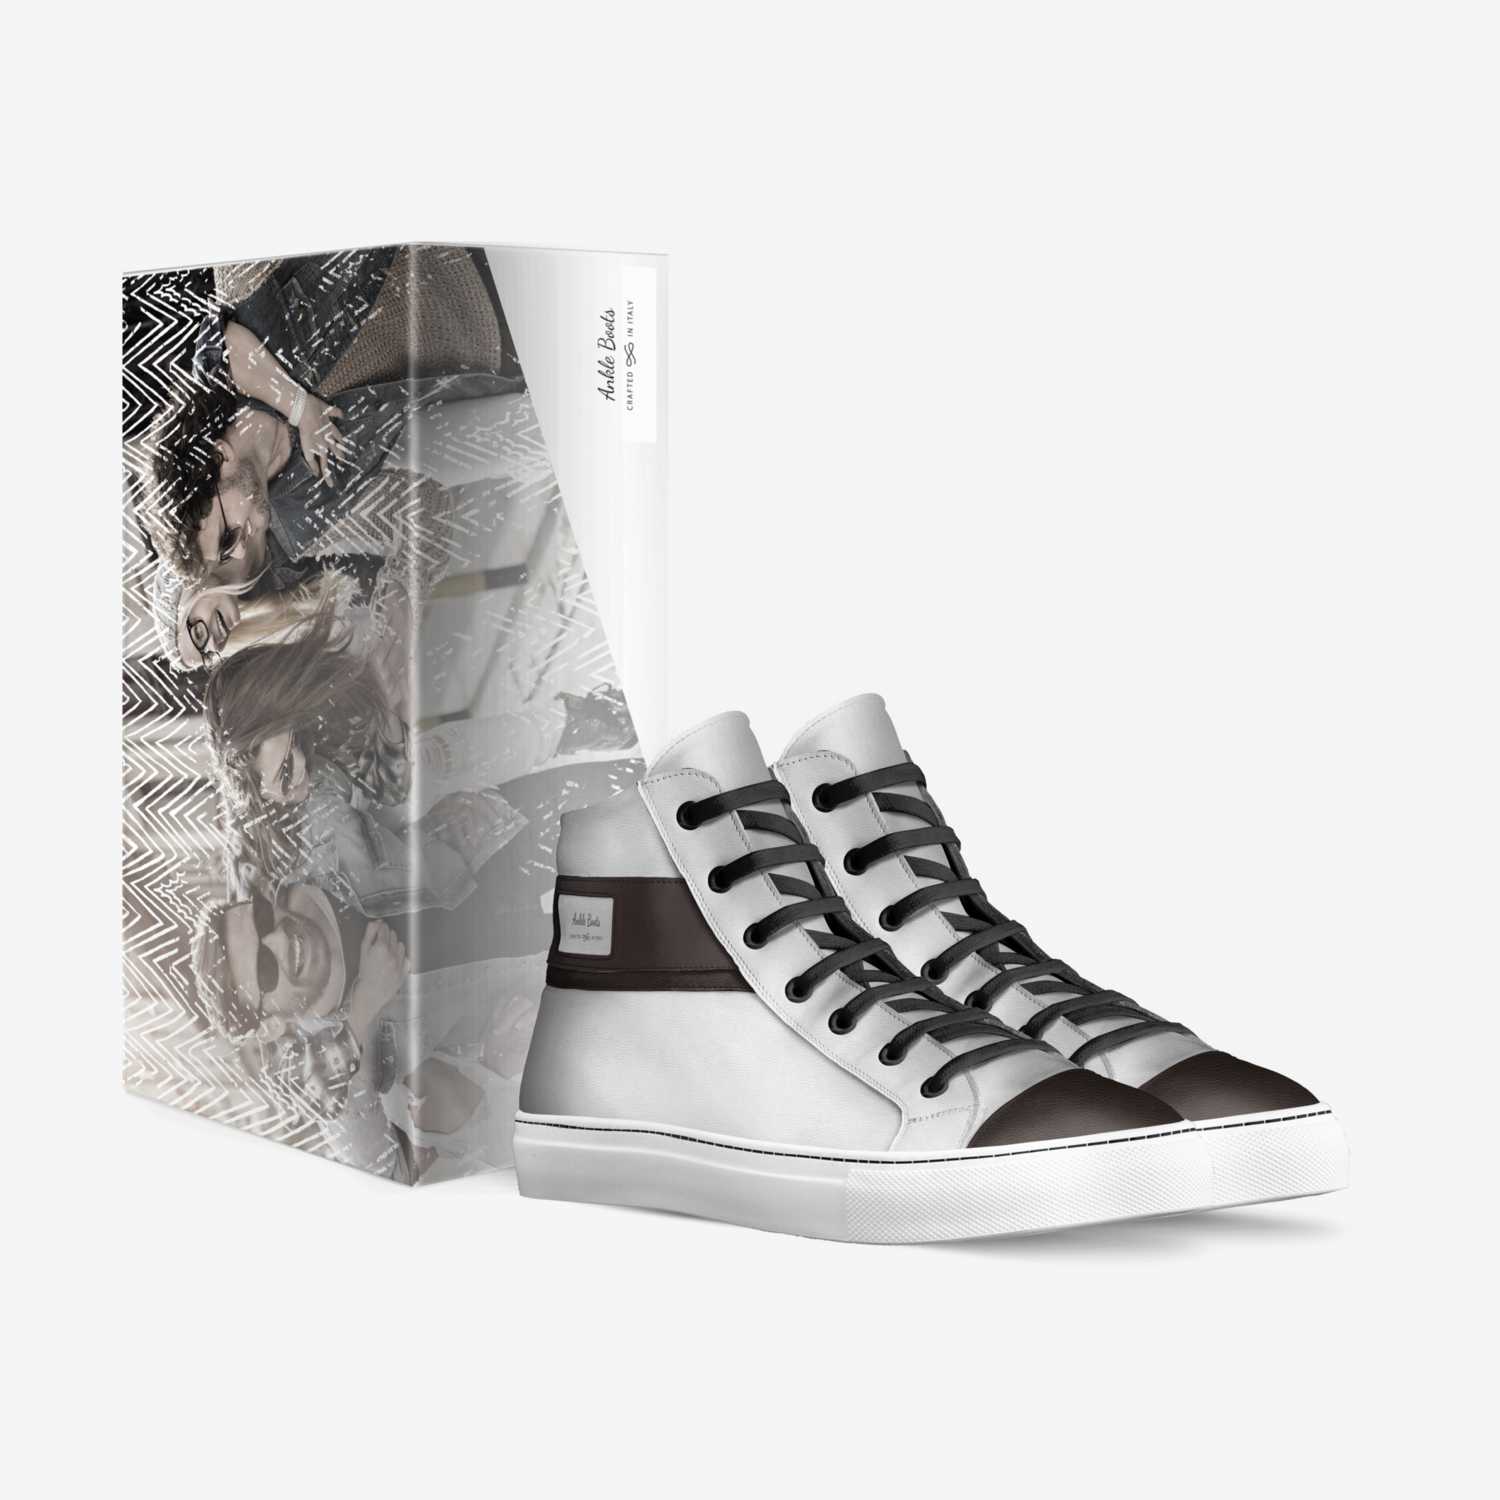 keekee custom made in Italy shoes by Kiara H. | Box view